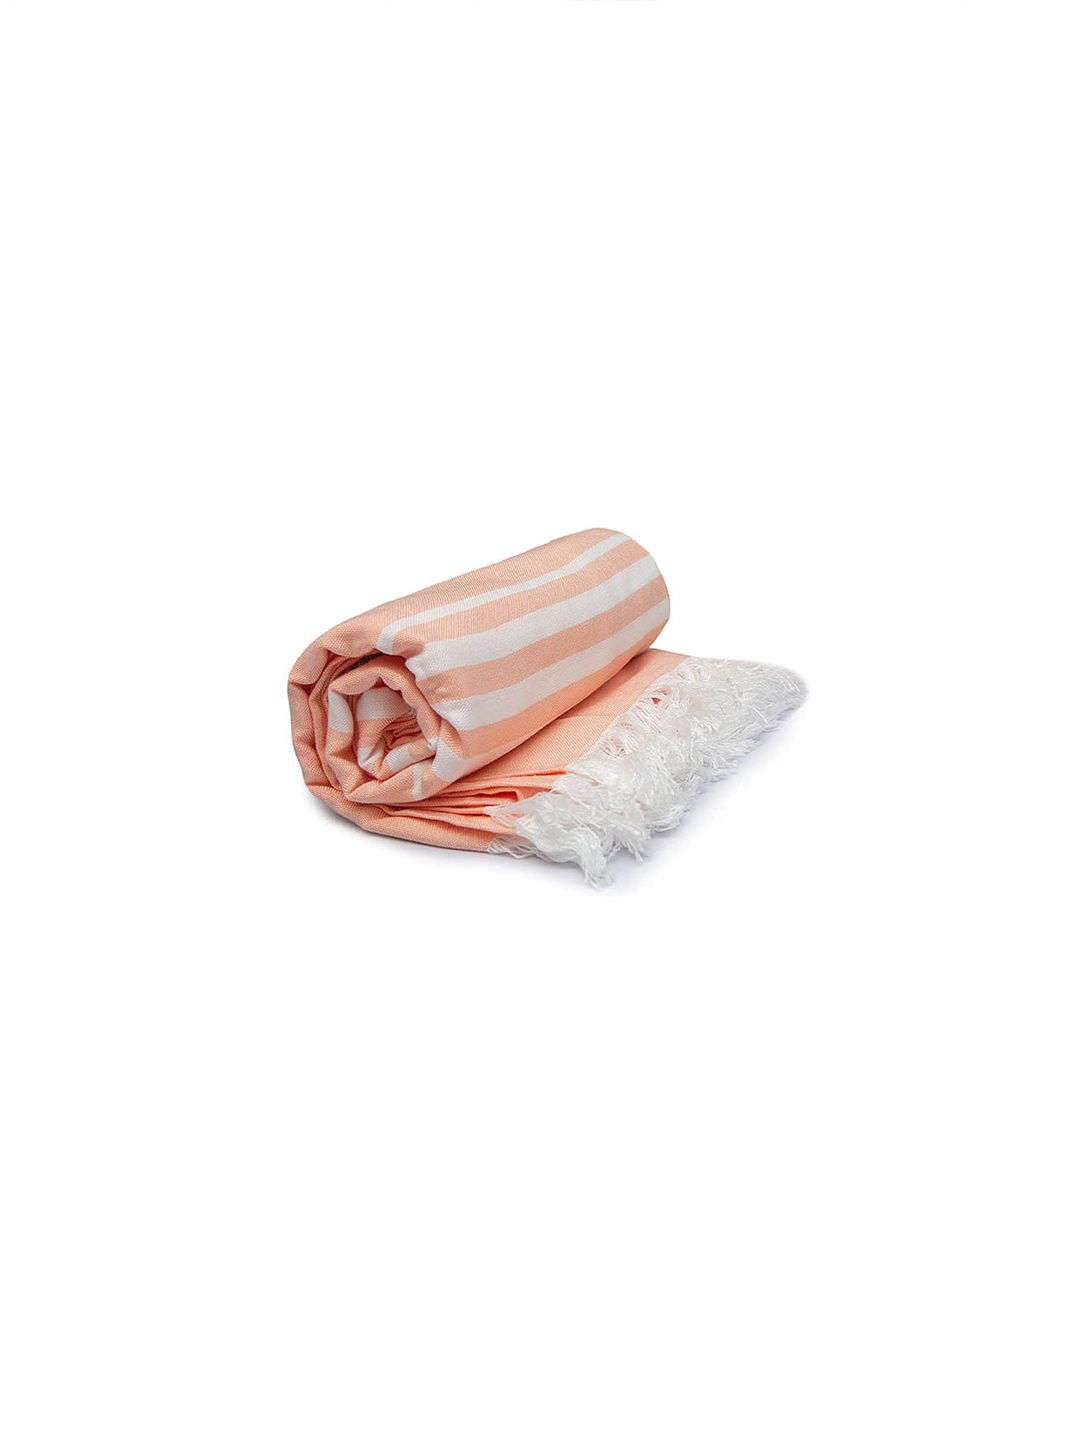 MUSH Peach & White Striped 300 GSM Quick Dry Turkish Bath Towel Price in India